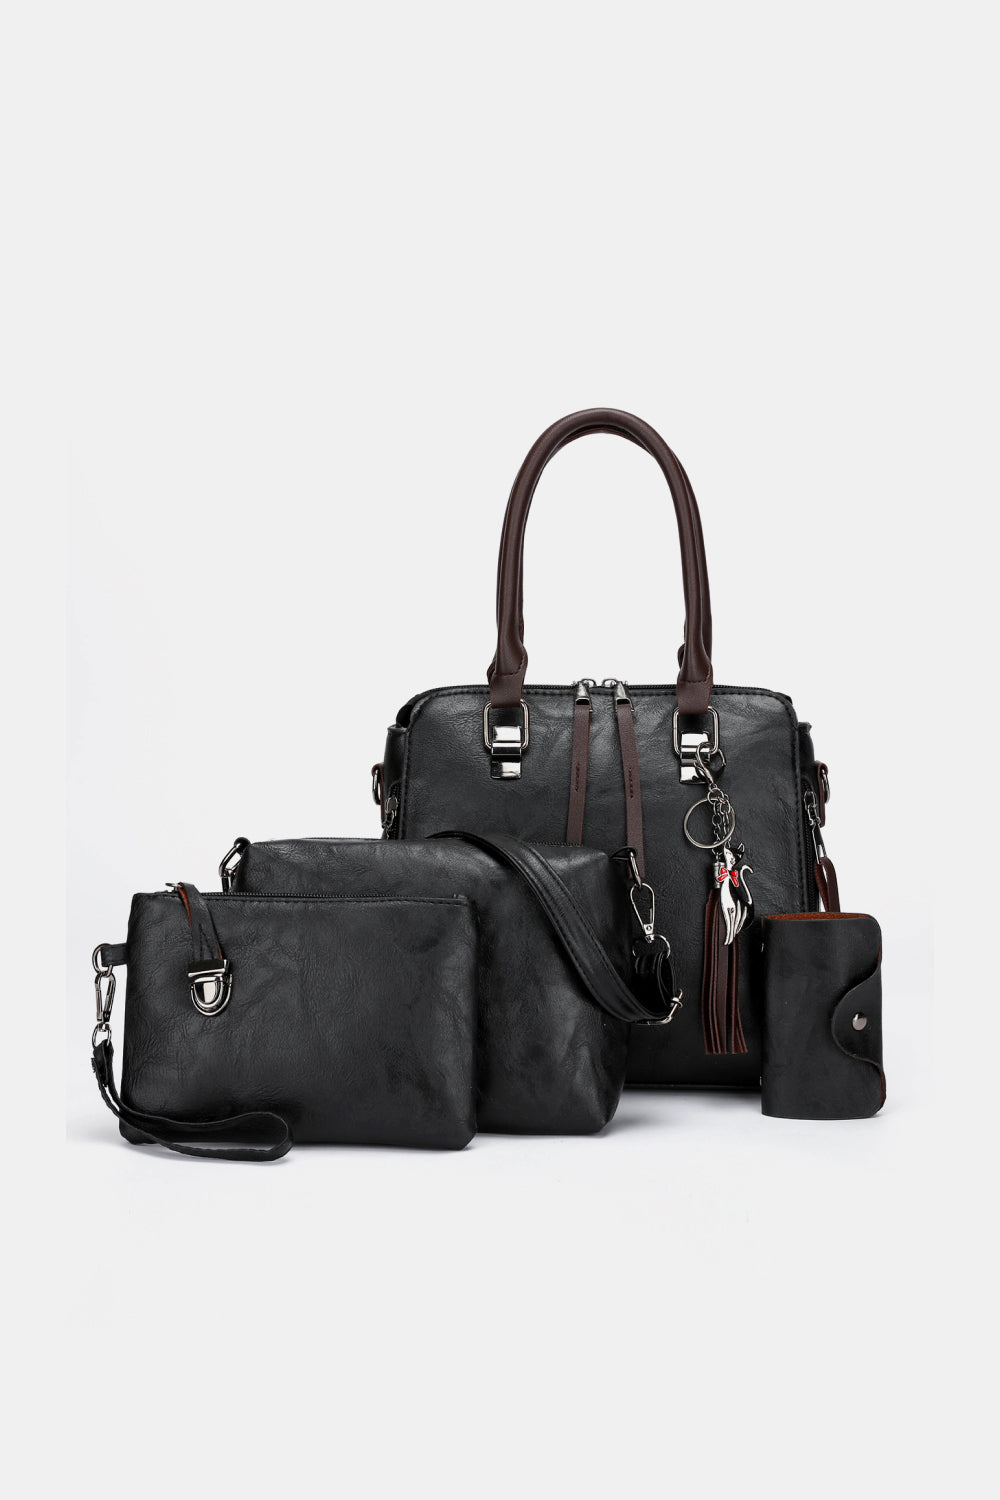 PU leather bags, Fashion accessories, Versatile bag set, Stylish handbags, Four-piece bag collection, Trendy purse set, Faux leather bags, Fashionable accessories, Coordinated bag ensemble, Affordable luxury bags.